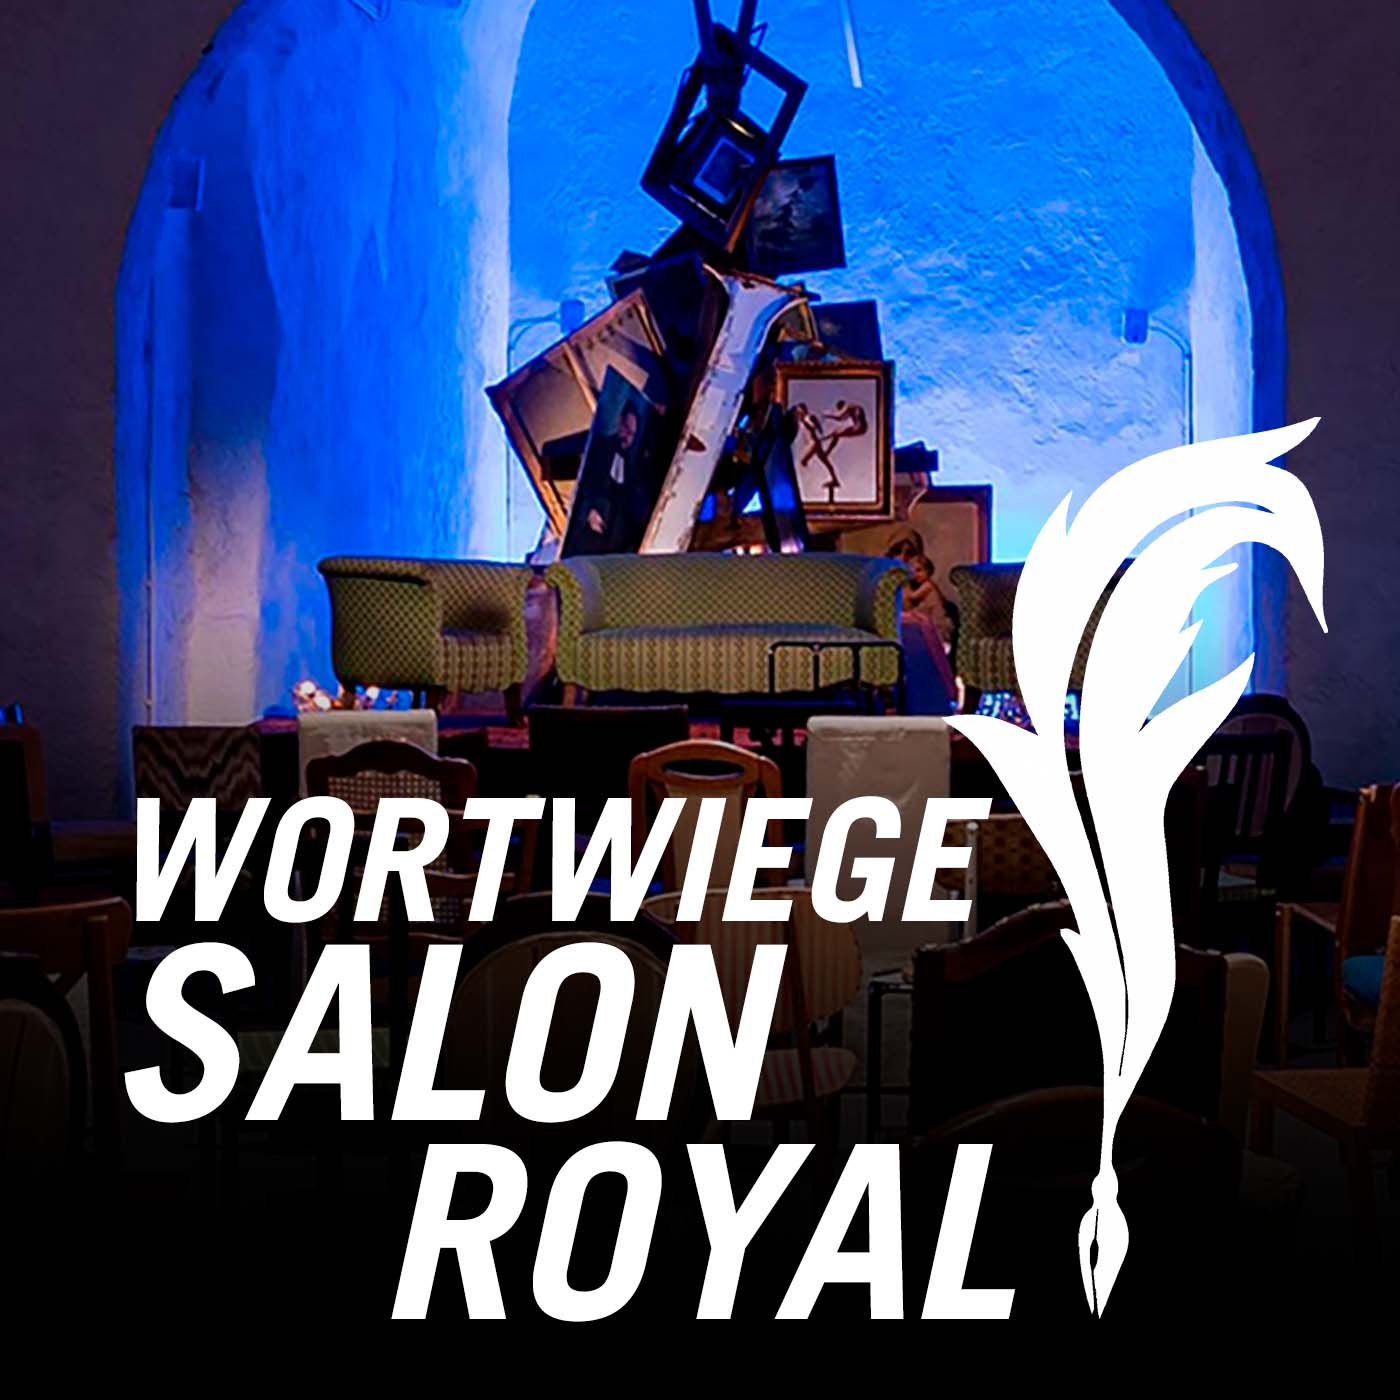 wortwiege-salon-royal-sujet